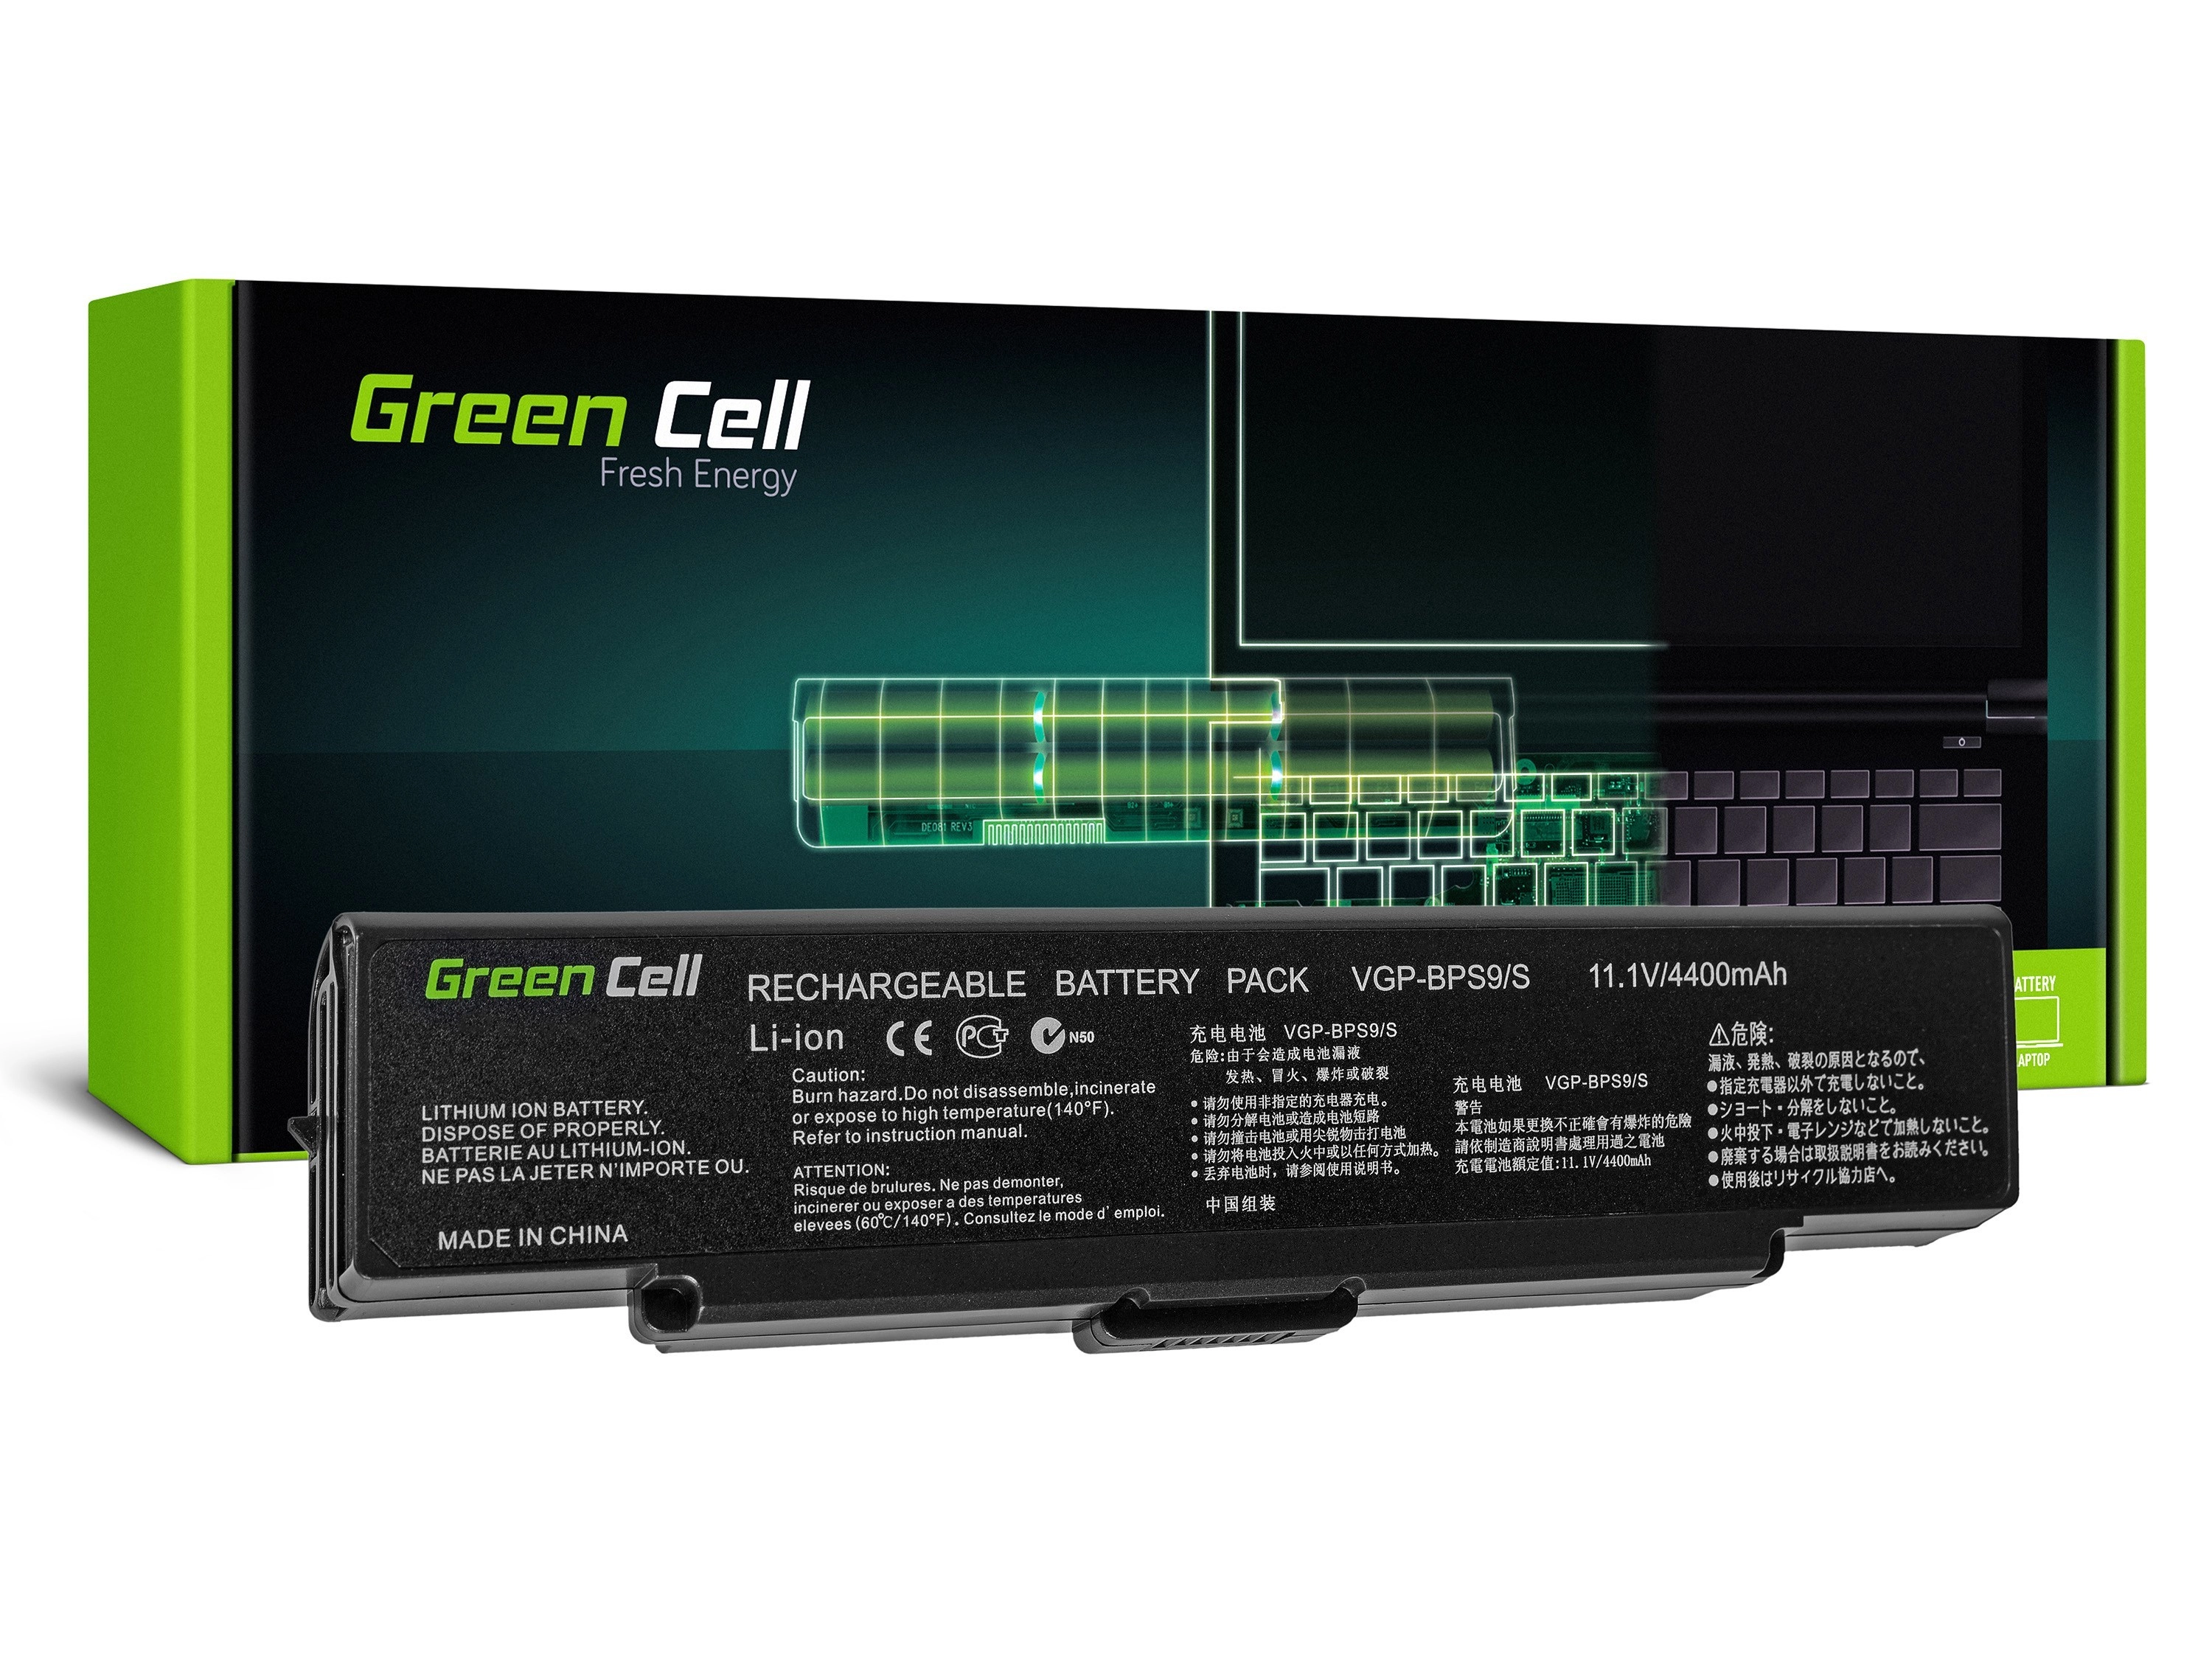 Green Cell Laptop akkumulátor Sony VAIO VGN-AR570 CTO VGN-AR670 CTO VGN-AR770 CTO